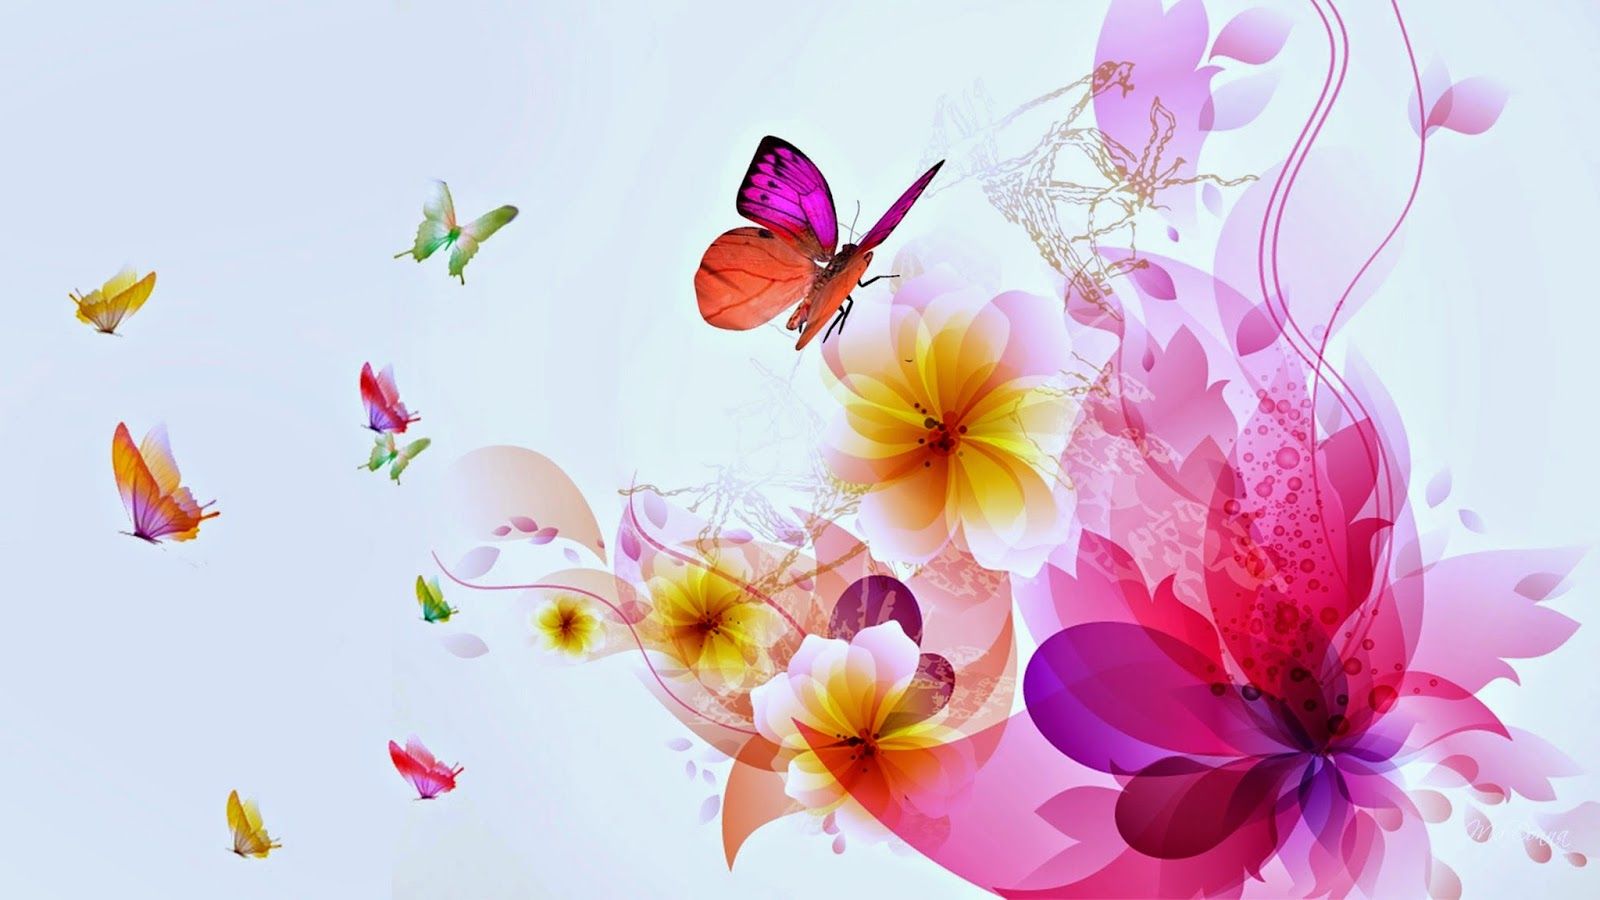 justpict.com Butterfly Wallpaper Designs